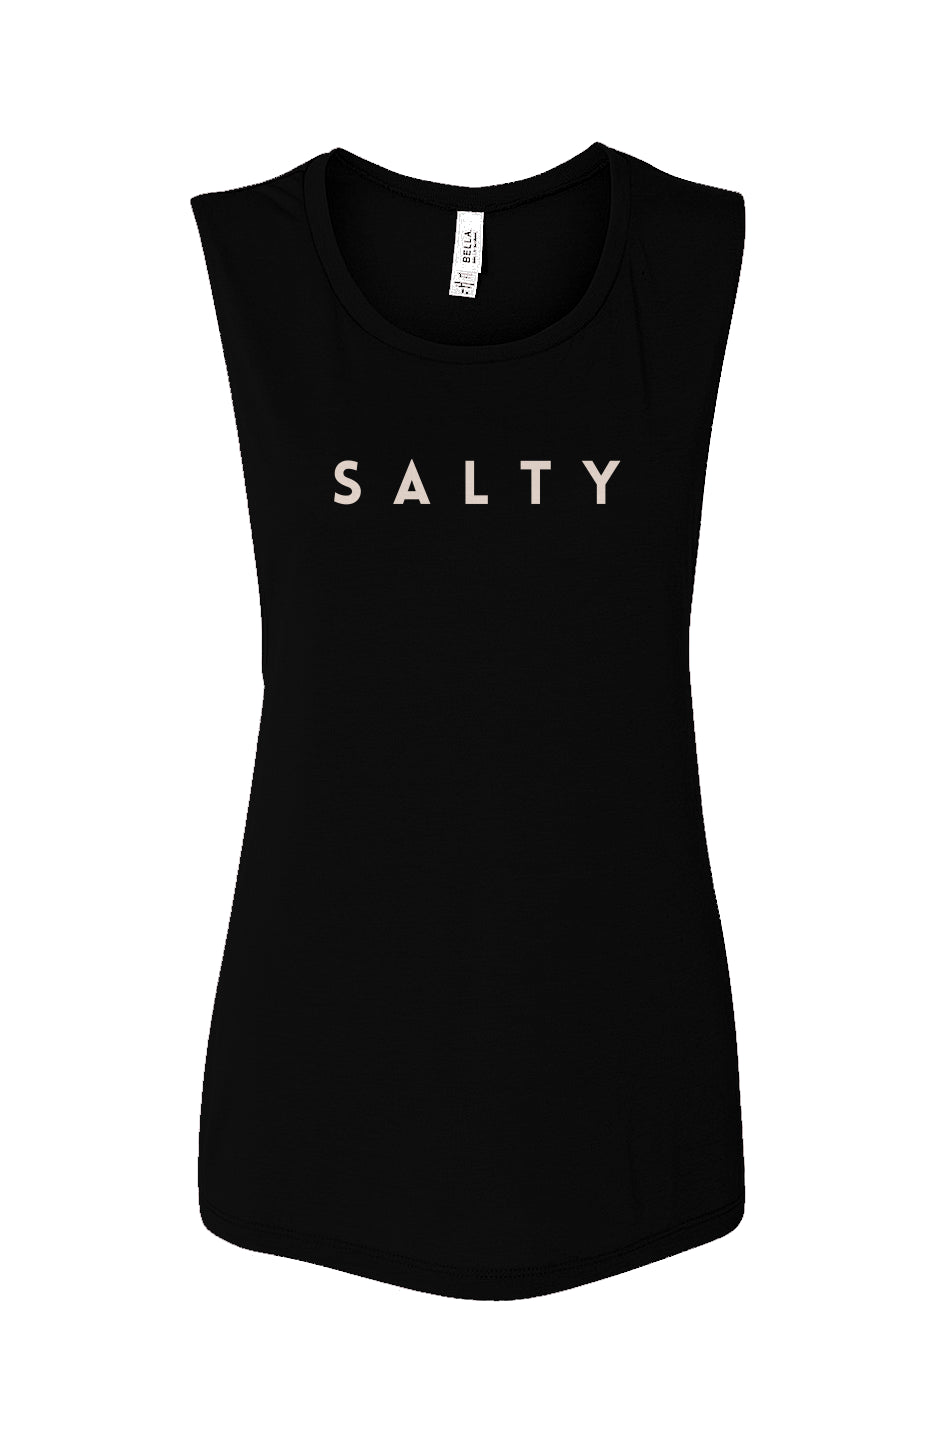 Salty Womens Muscle Tank